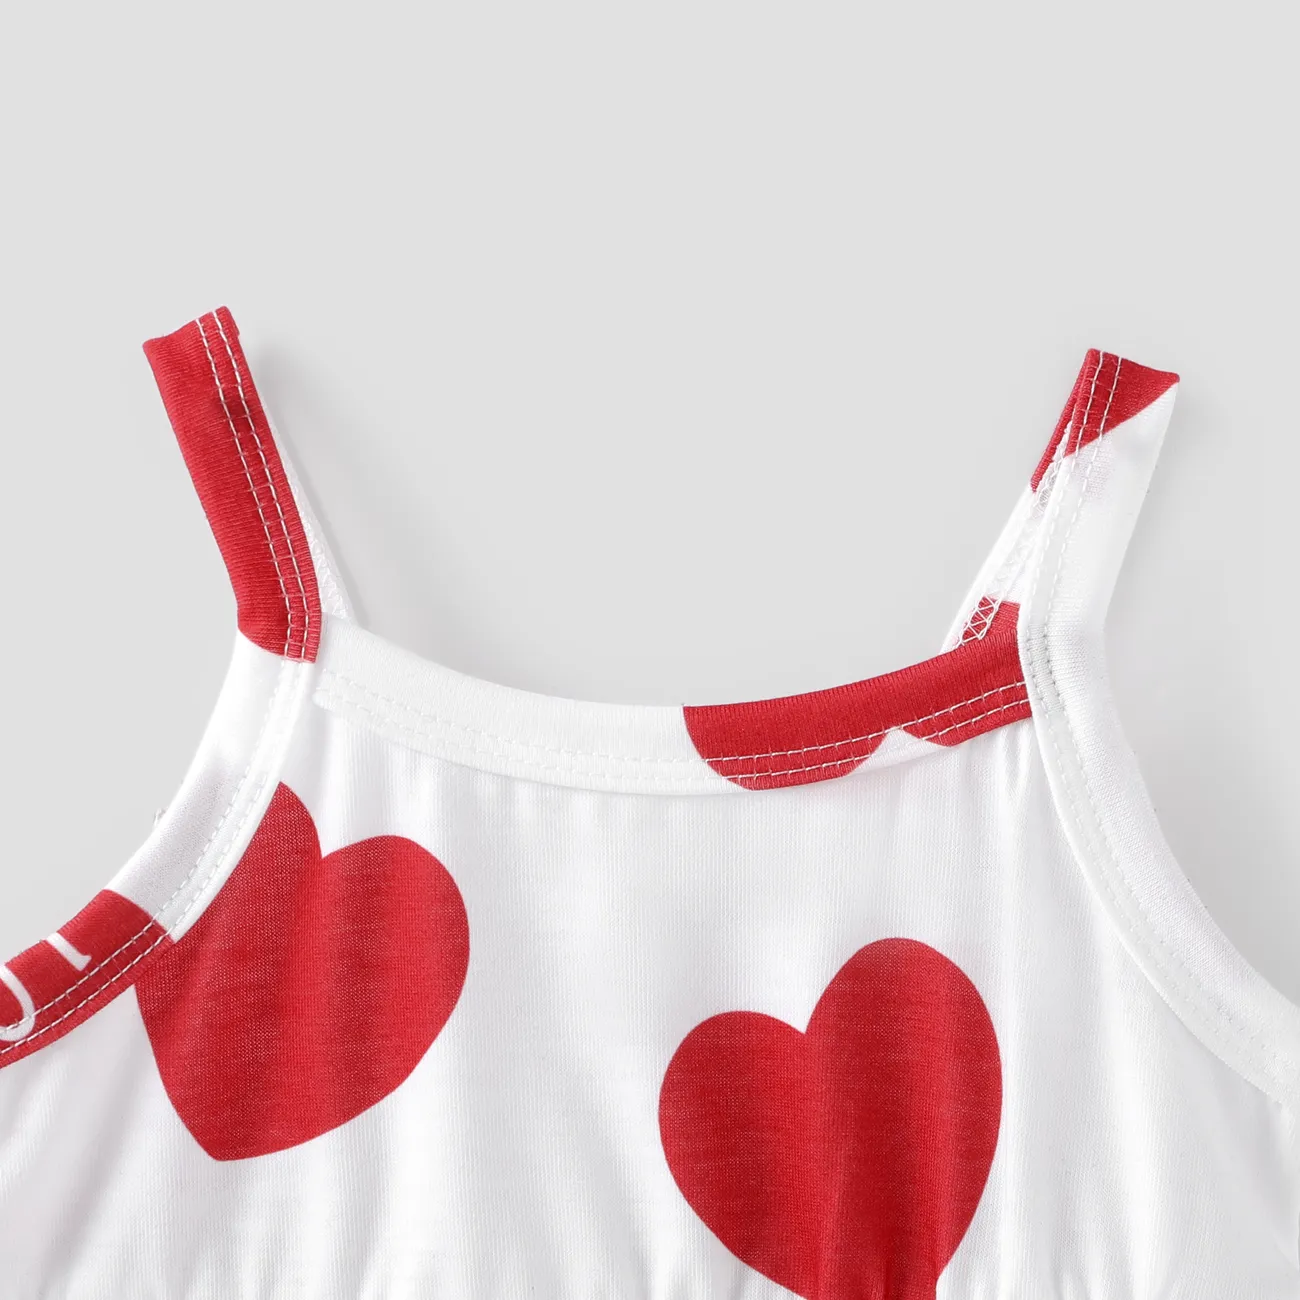 Baby Girl 3pcs Ruffled Cardigan and Heart-shaped Print Dress with headband REDWHITE big image 1